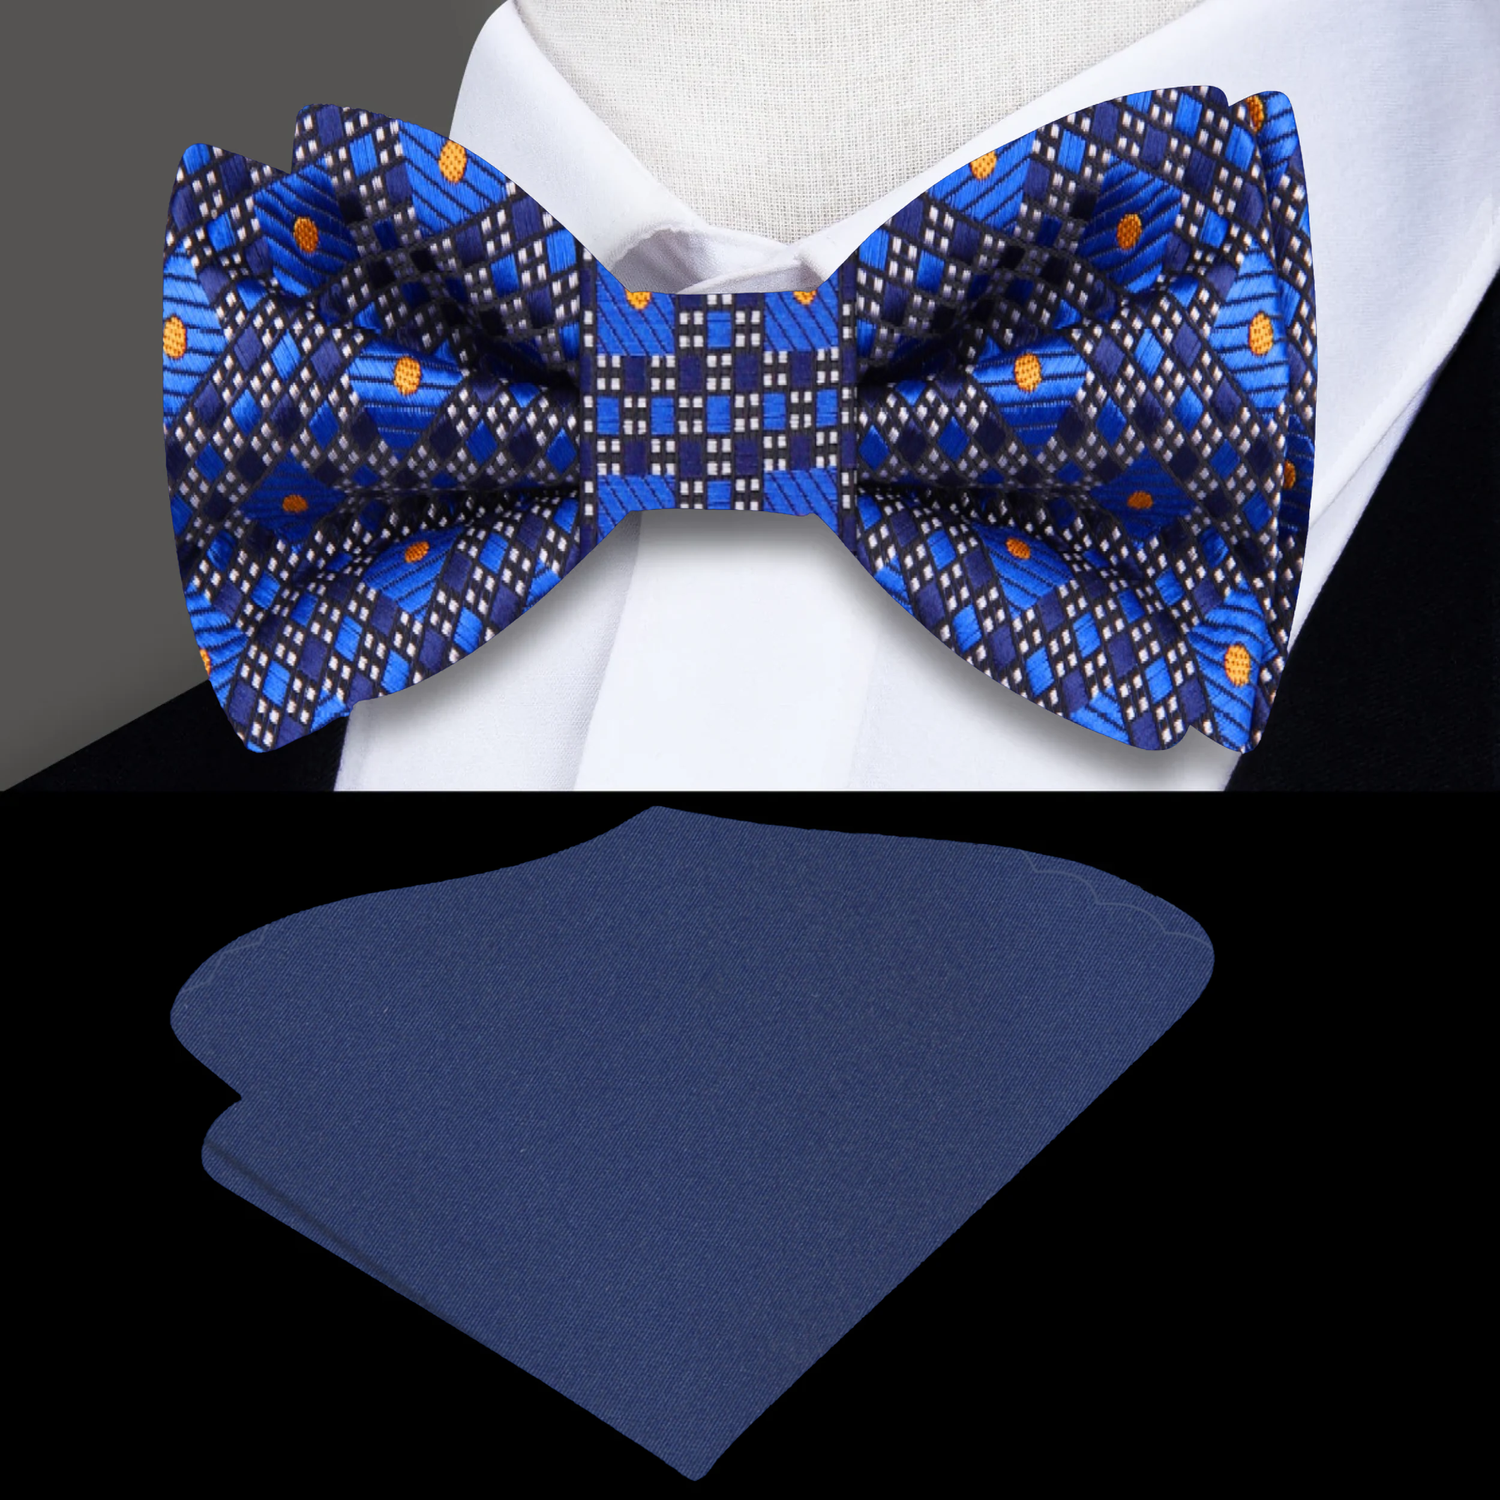 Main: Shades of Blue Geometric Blocks Bow Tie and Dark Blue Square